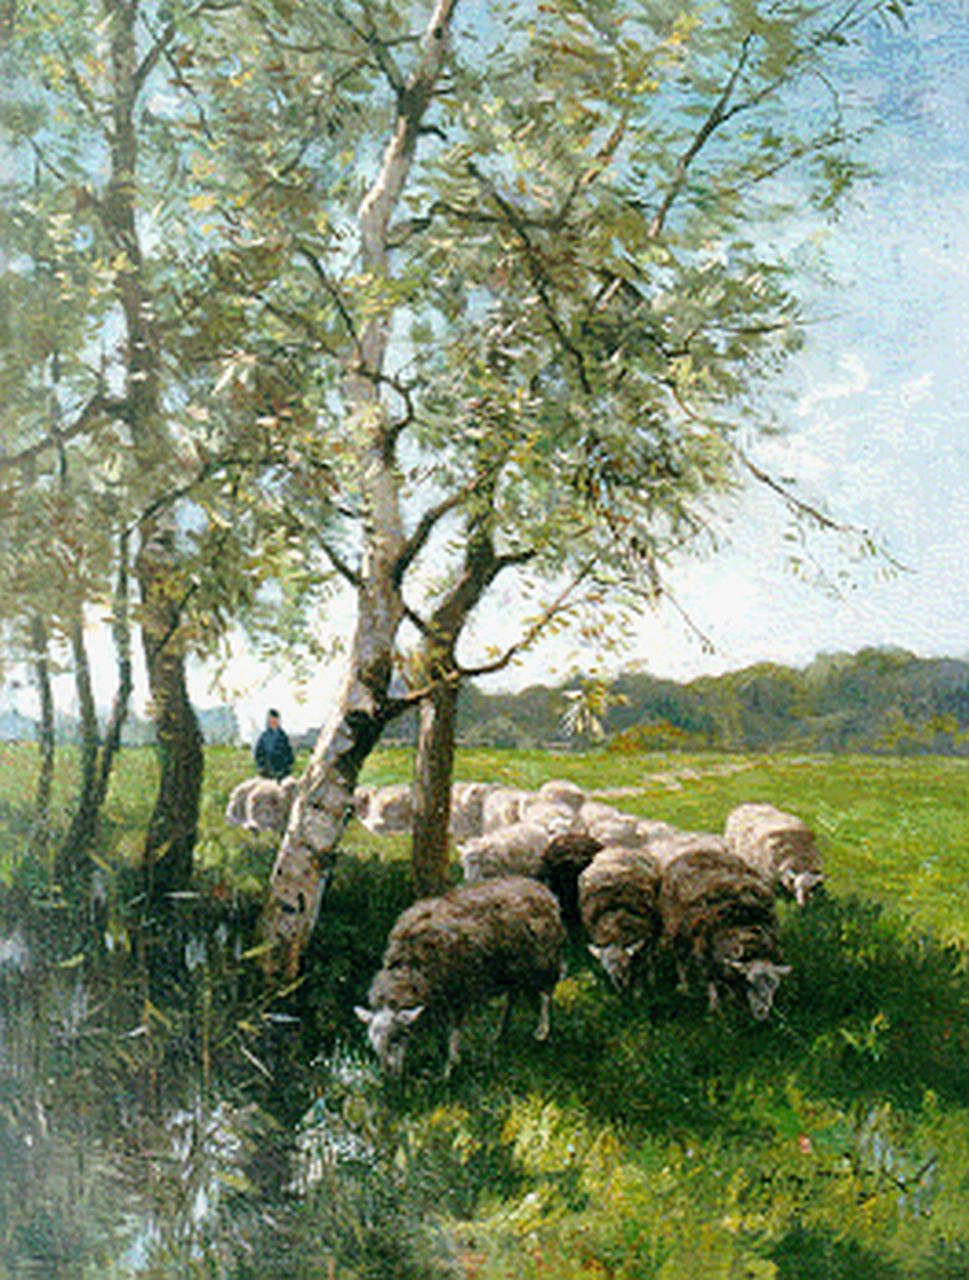 Steelink jr. W.  | Willem Steelink jr., A shepherd with his flock, Öl auf Leinwand 41,3 x 31,6 cm, signed l.r.